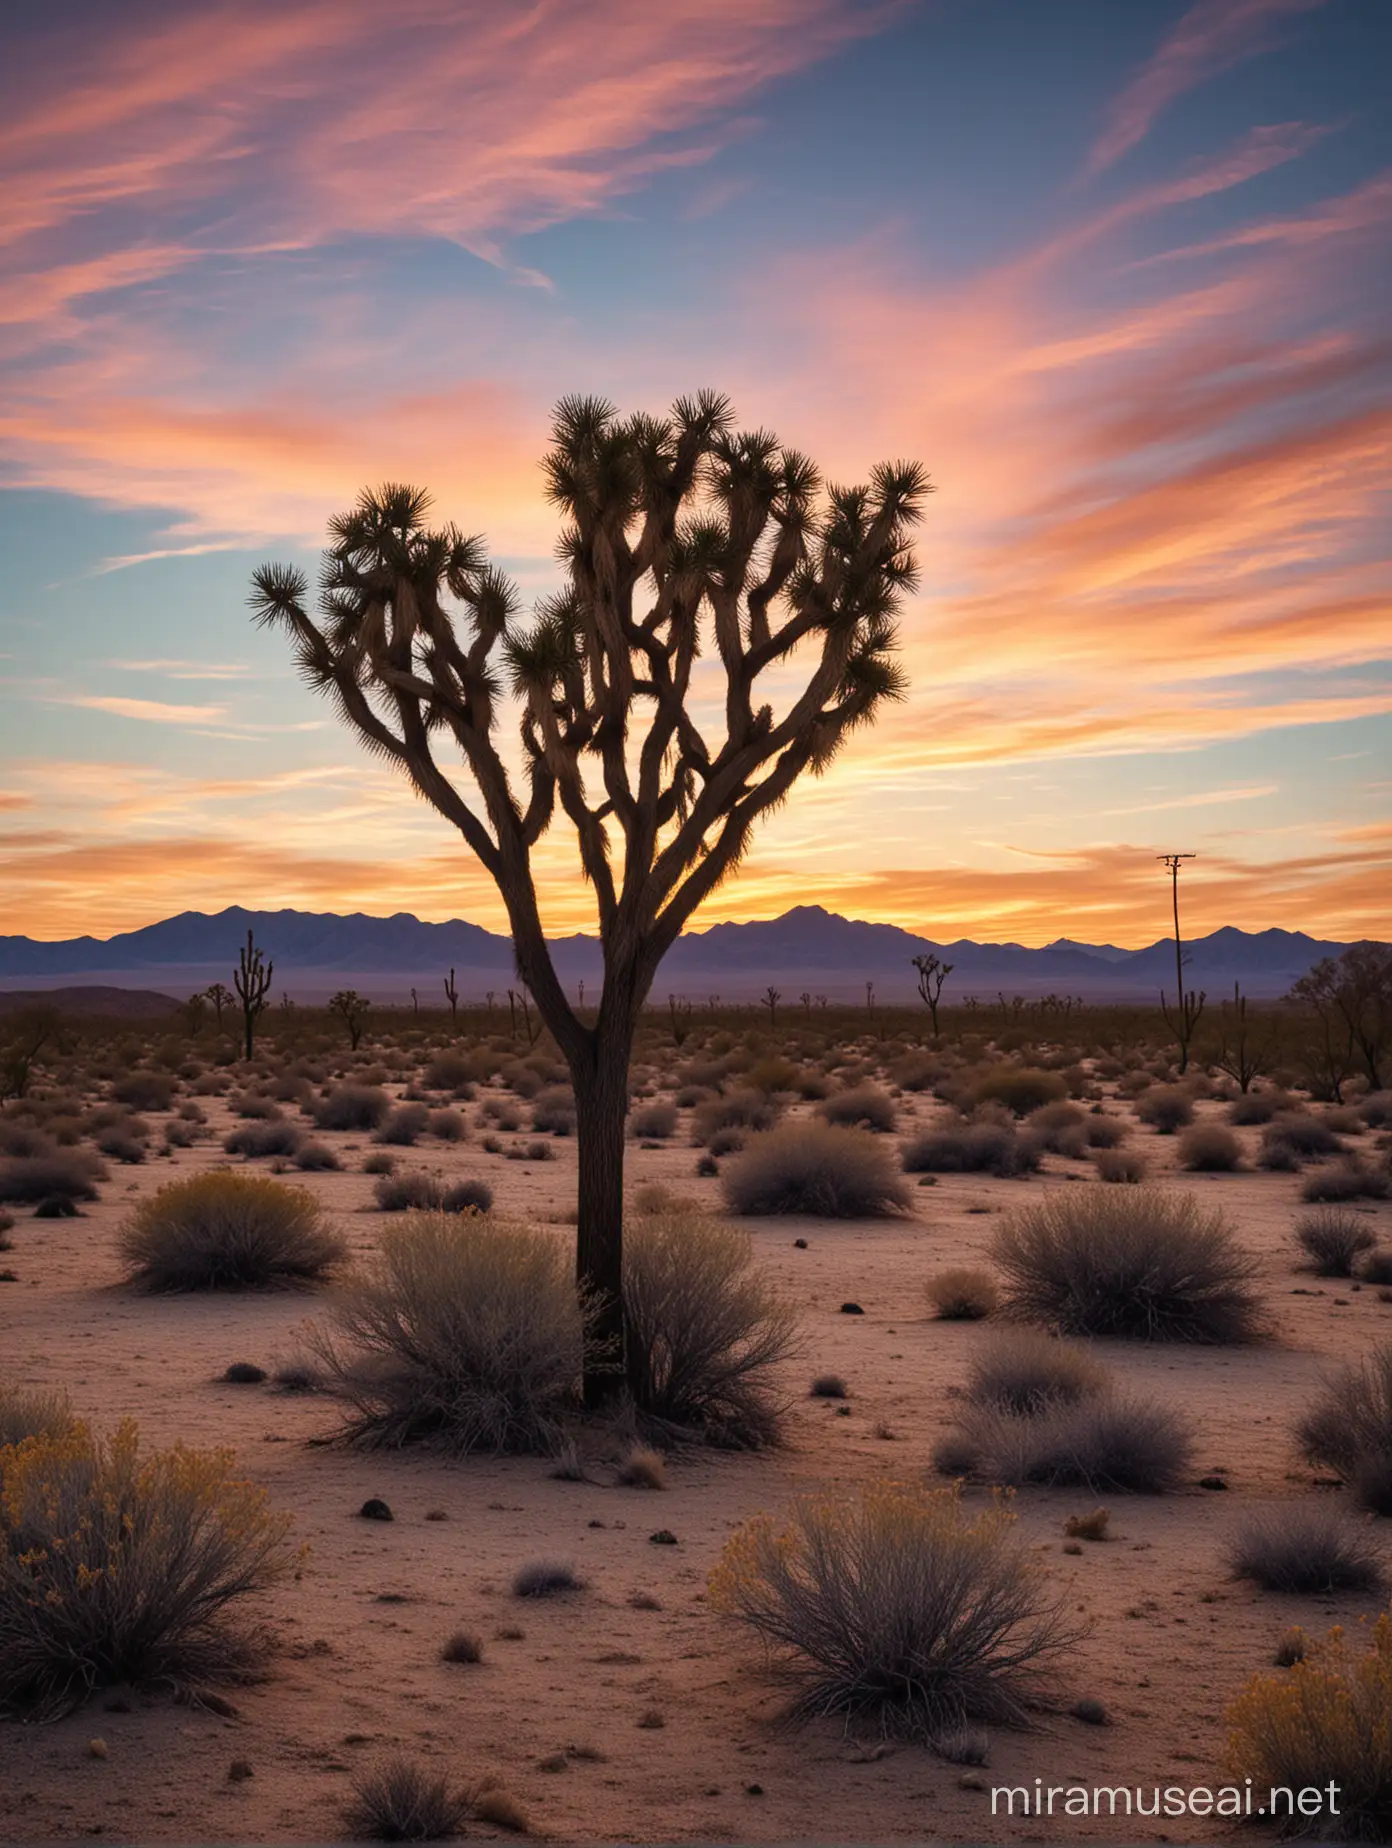 Sunset Serenity in Mojave Desert with Nostalgic Warmth